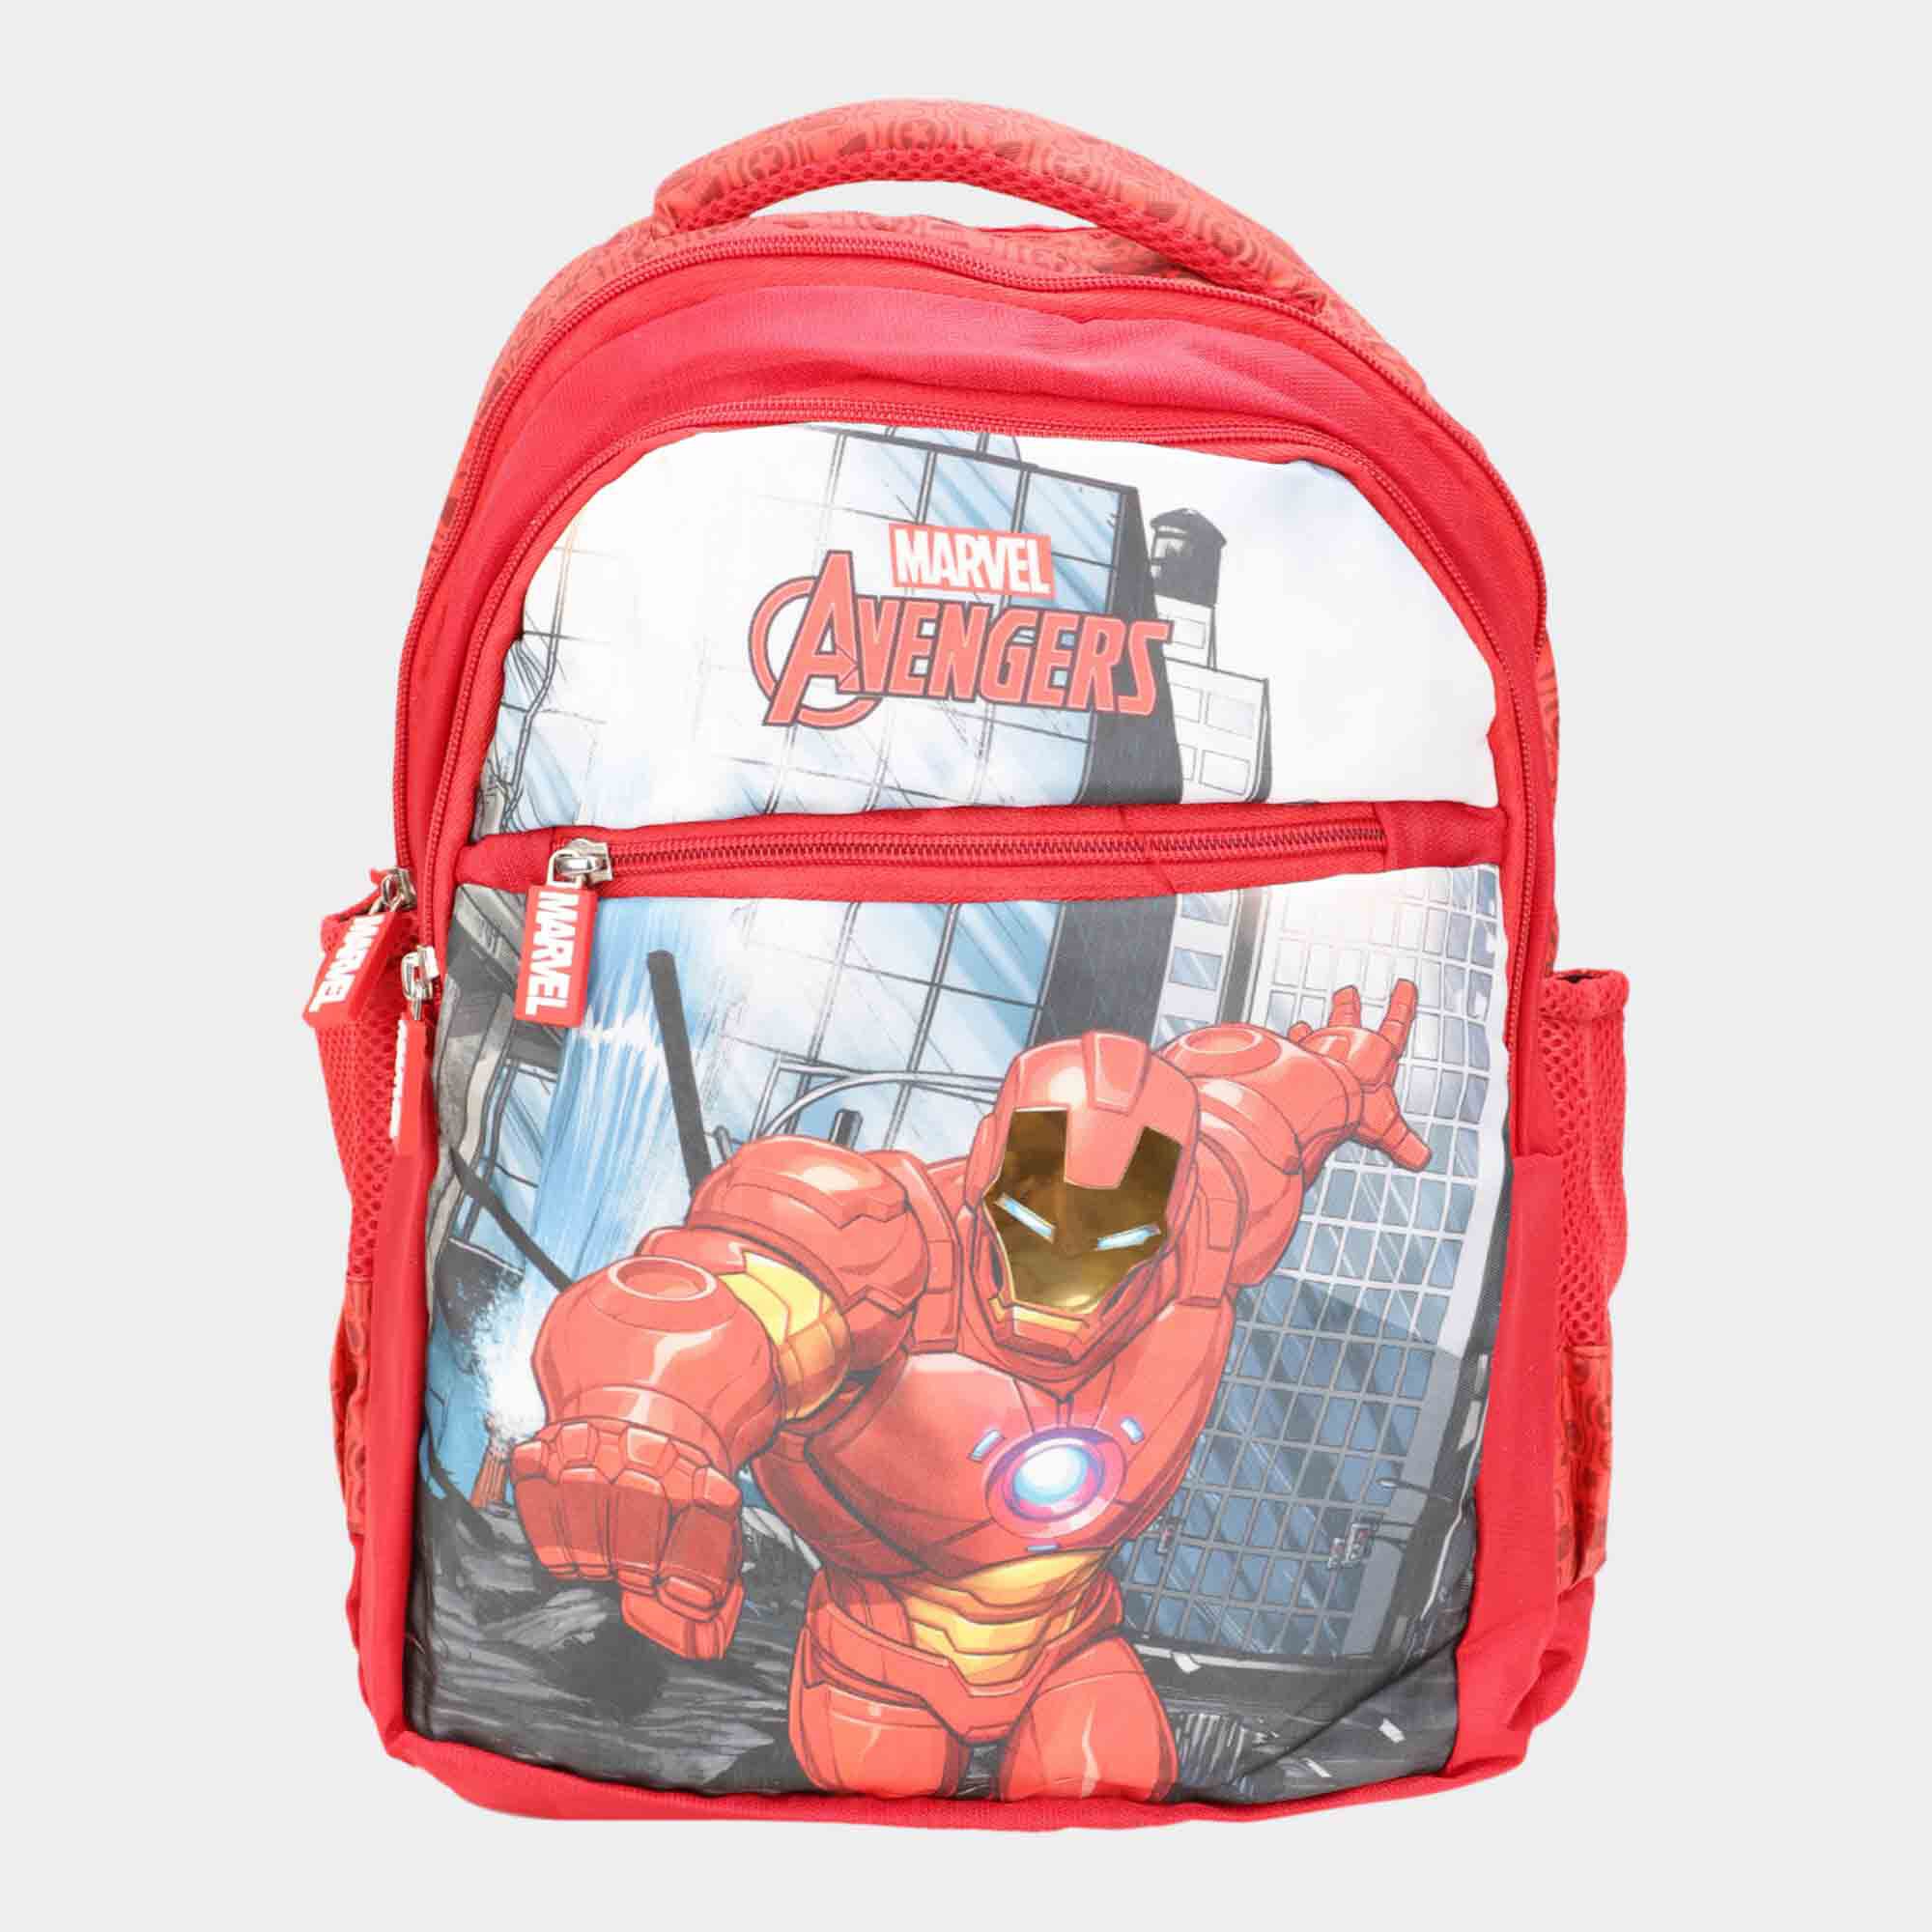 Iron Man 3 - Two Wheels Trolley School and Travel Backpack - Walmart.com